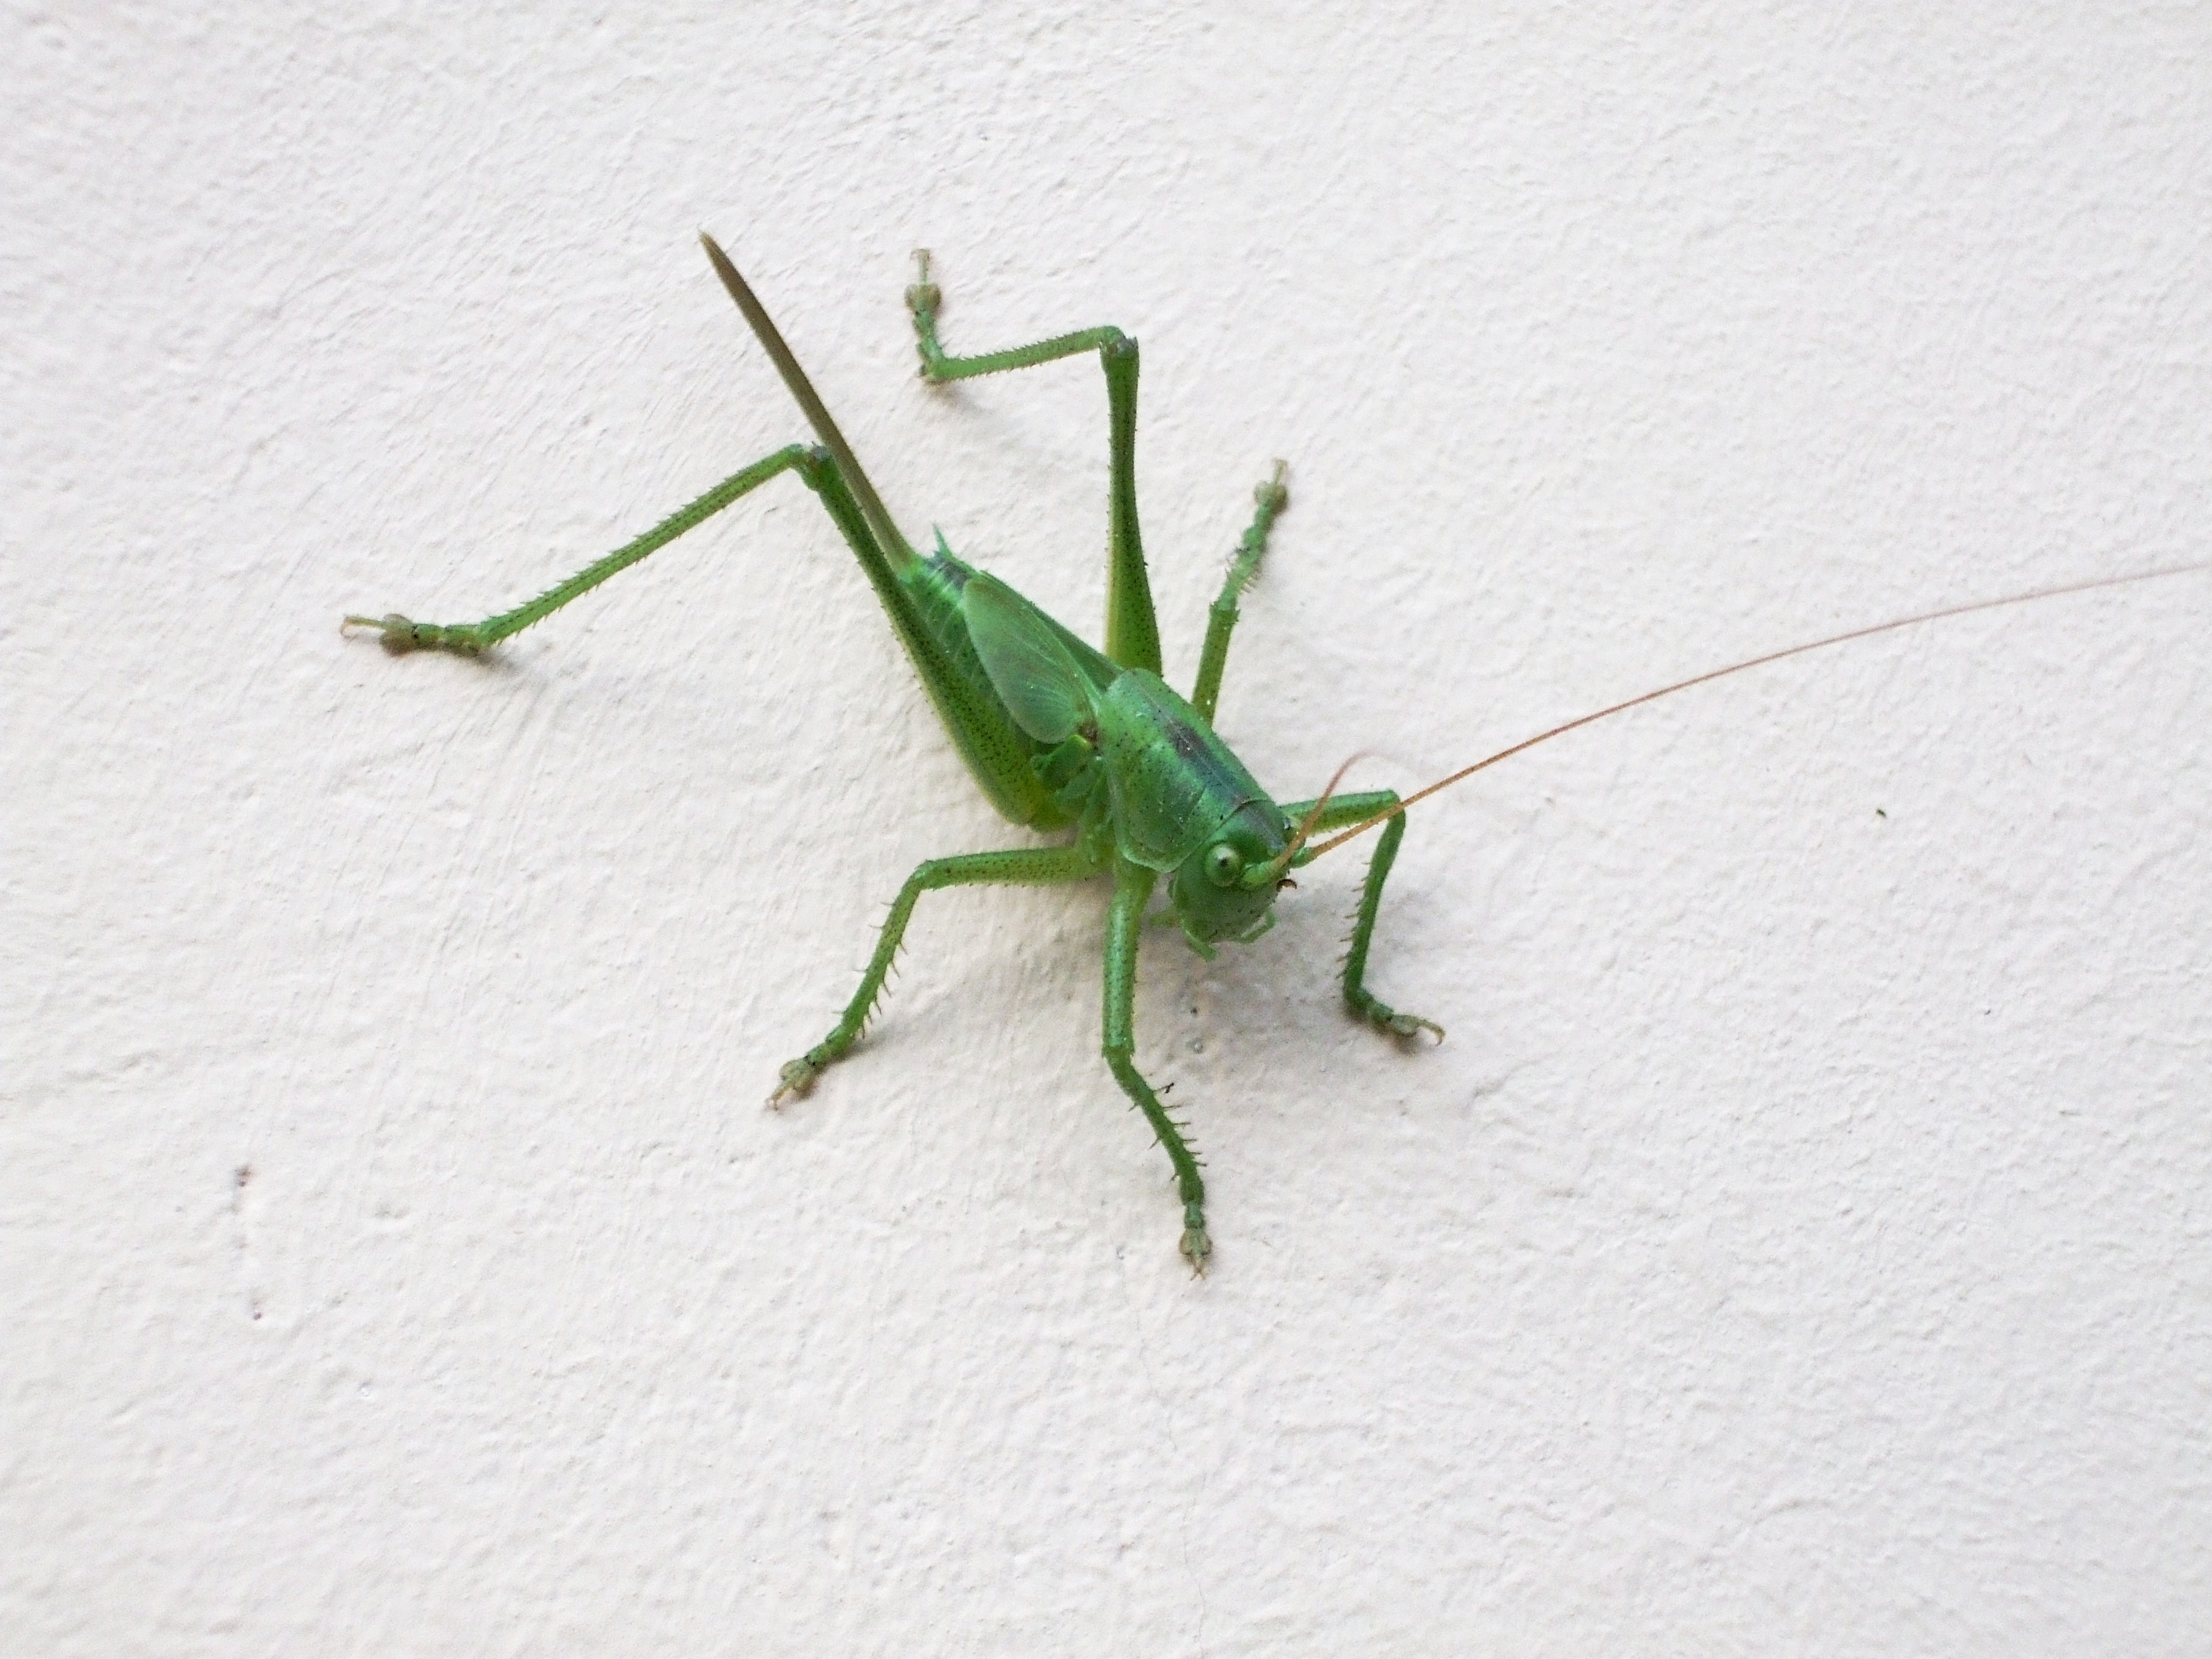 green cricket by CsillaT on DeviantArt